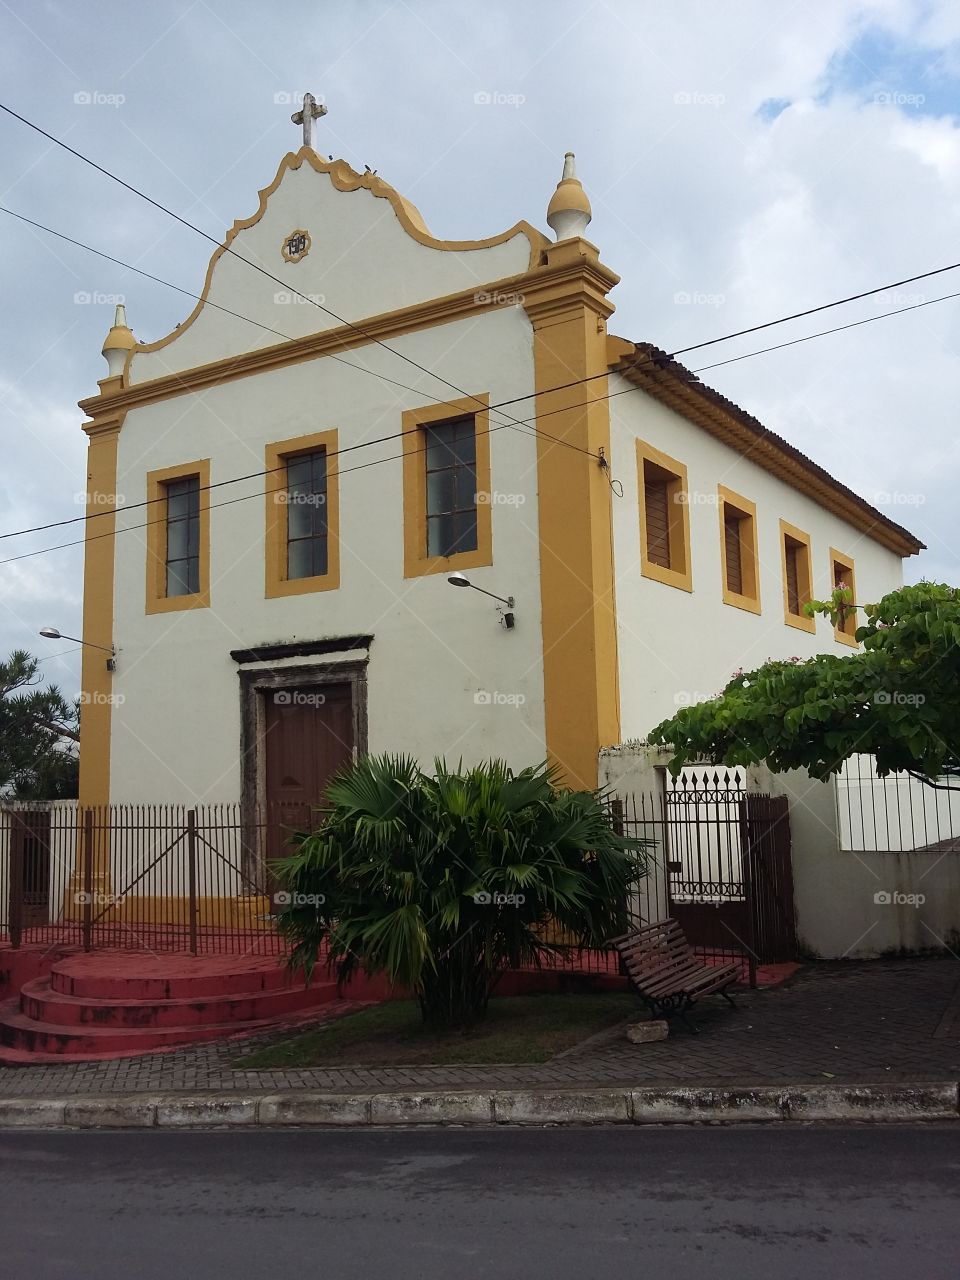 Parish of St. Michael in Ipojuca, Pernambuco, Brazil.